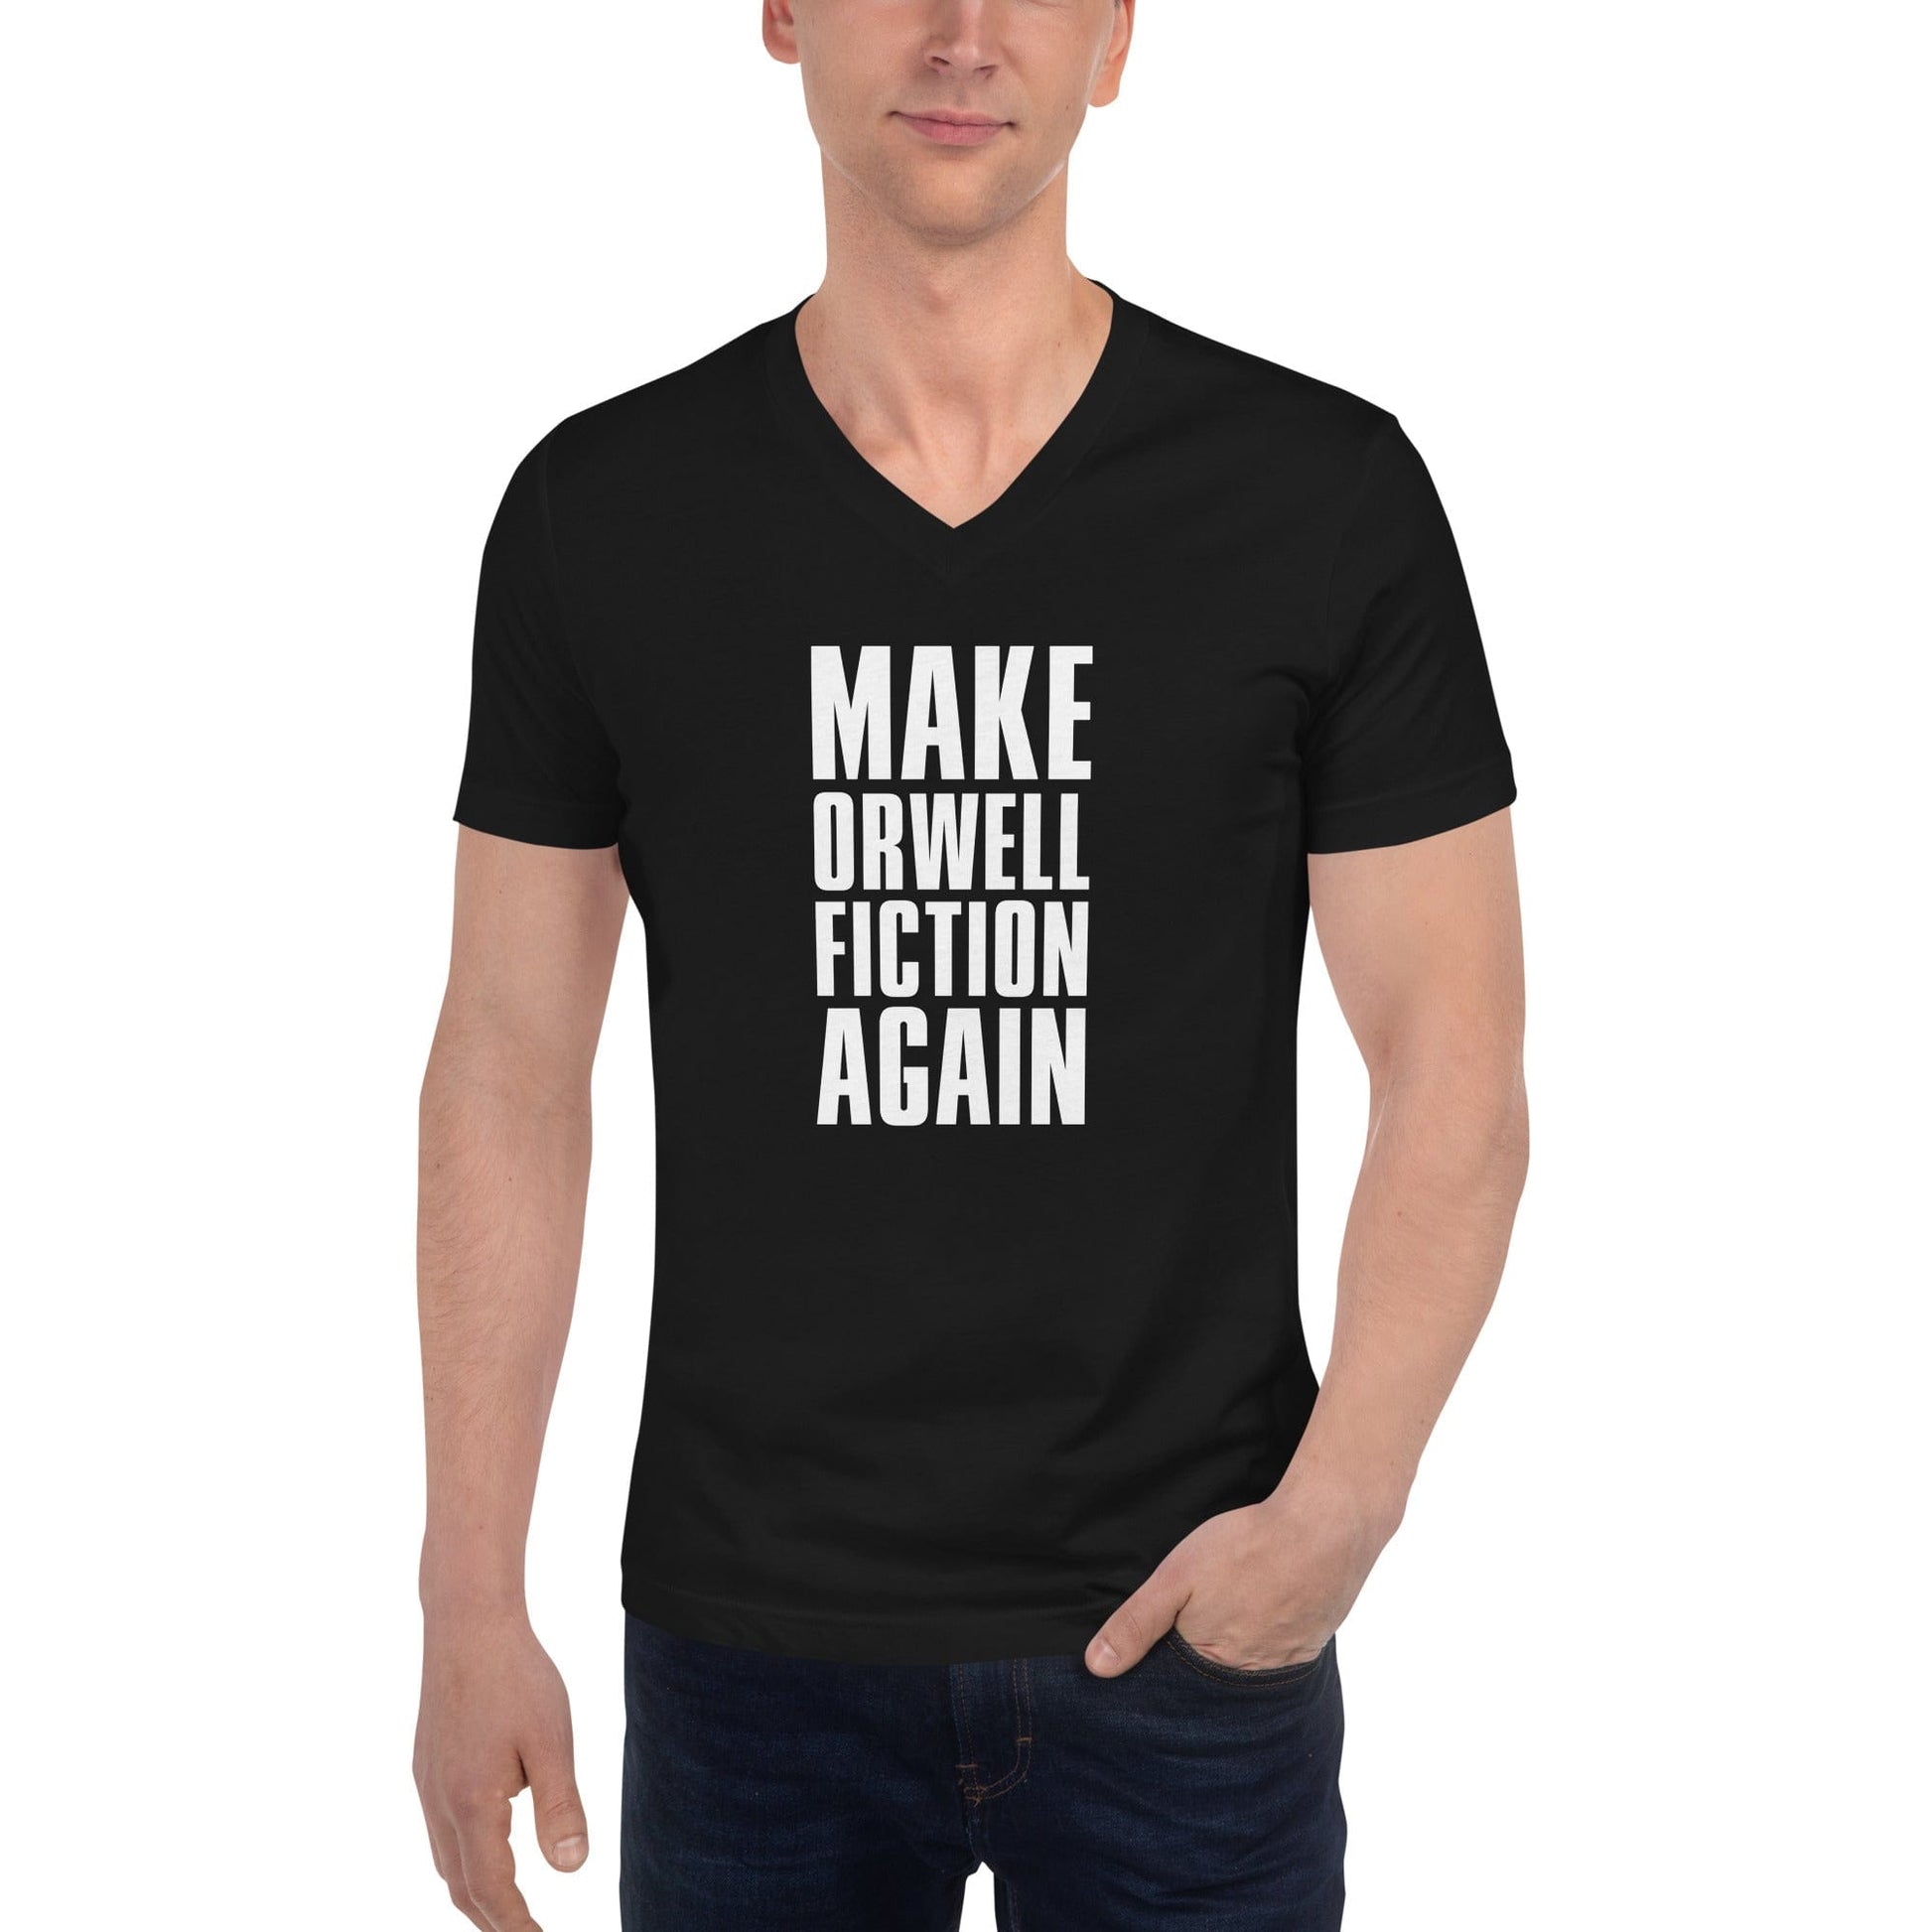 Make Orwell Fiction Again - Unisex V-Neck T-Shirt - Black / XL - Discounted (US)